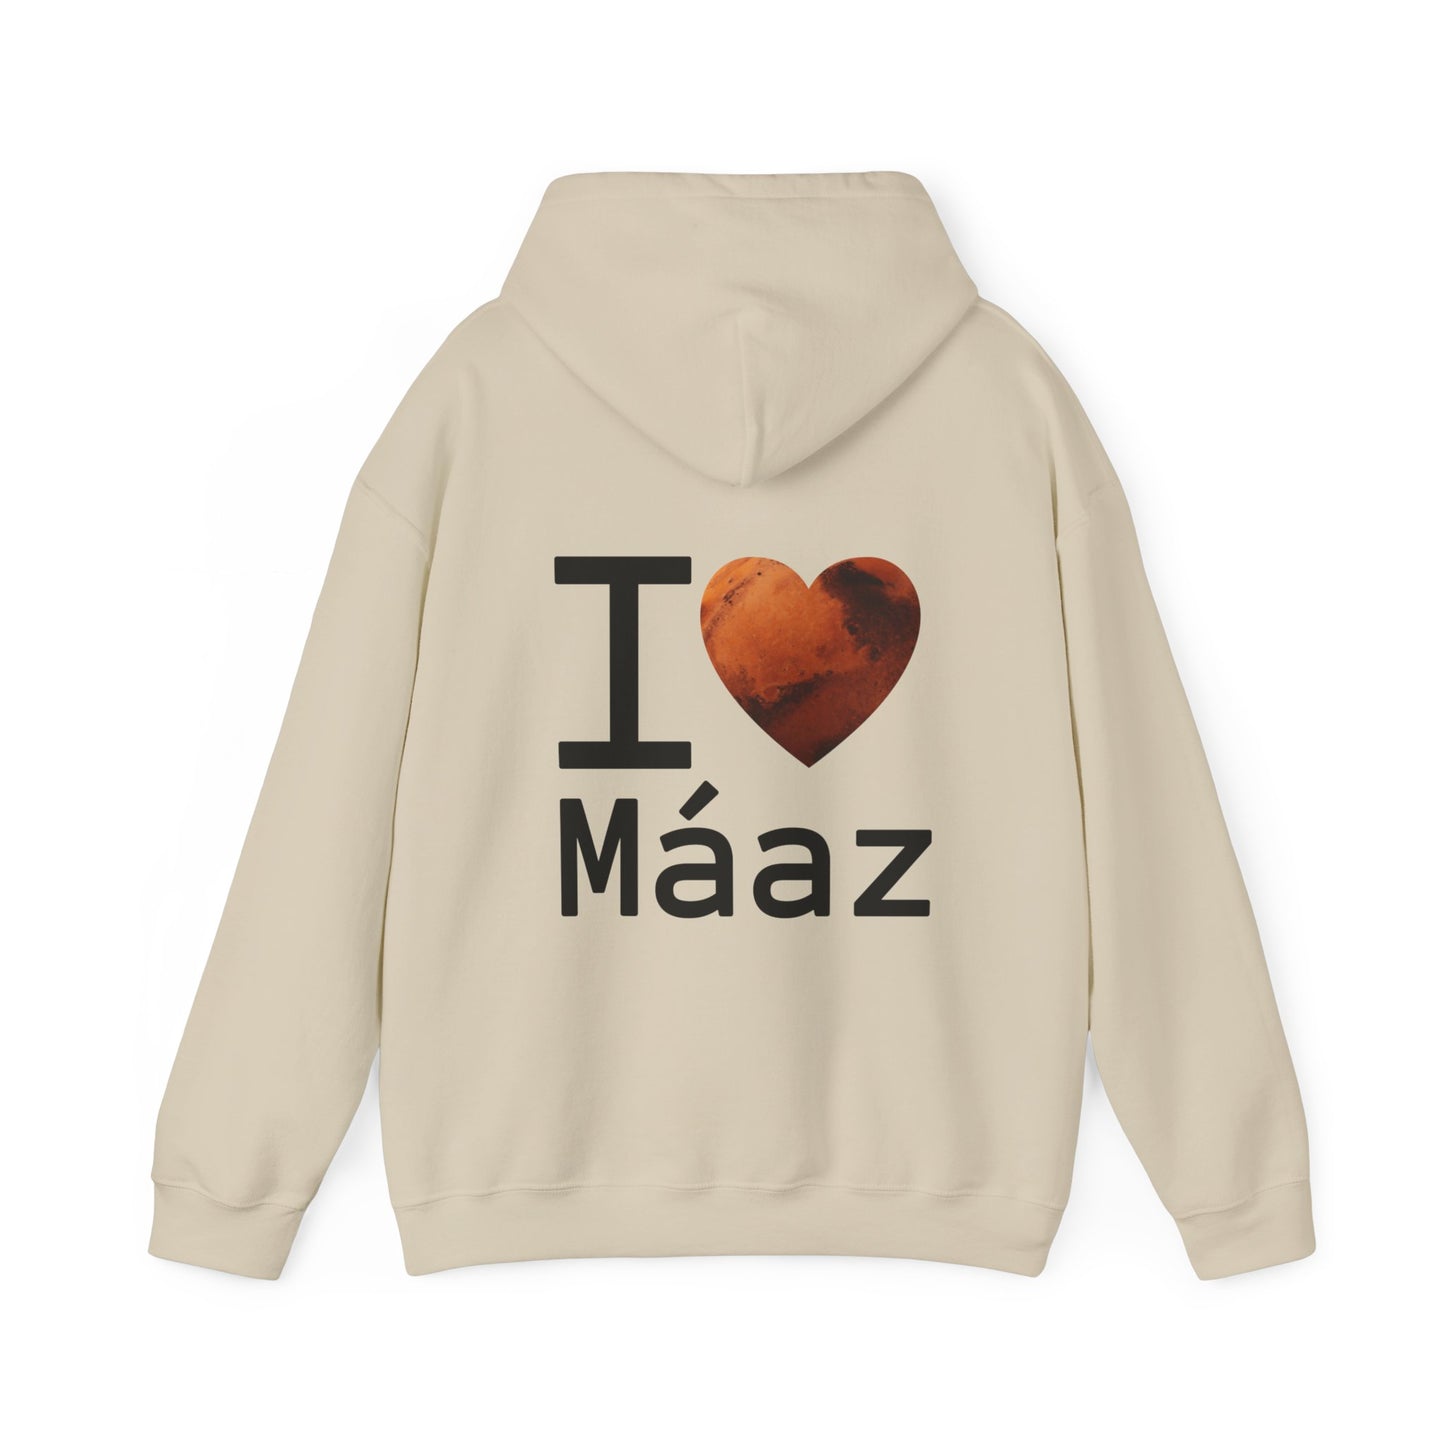 I Love Mars Unisex Heavy Blend Hooded Sweatshirt